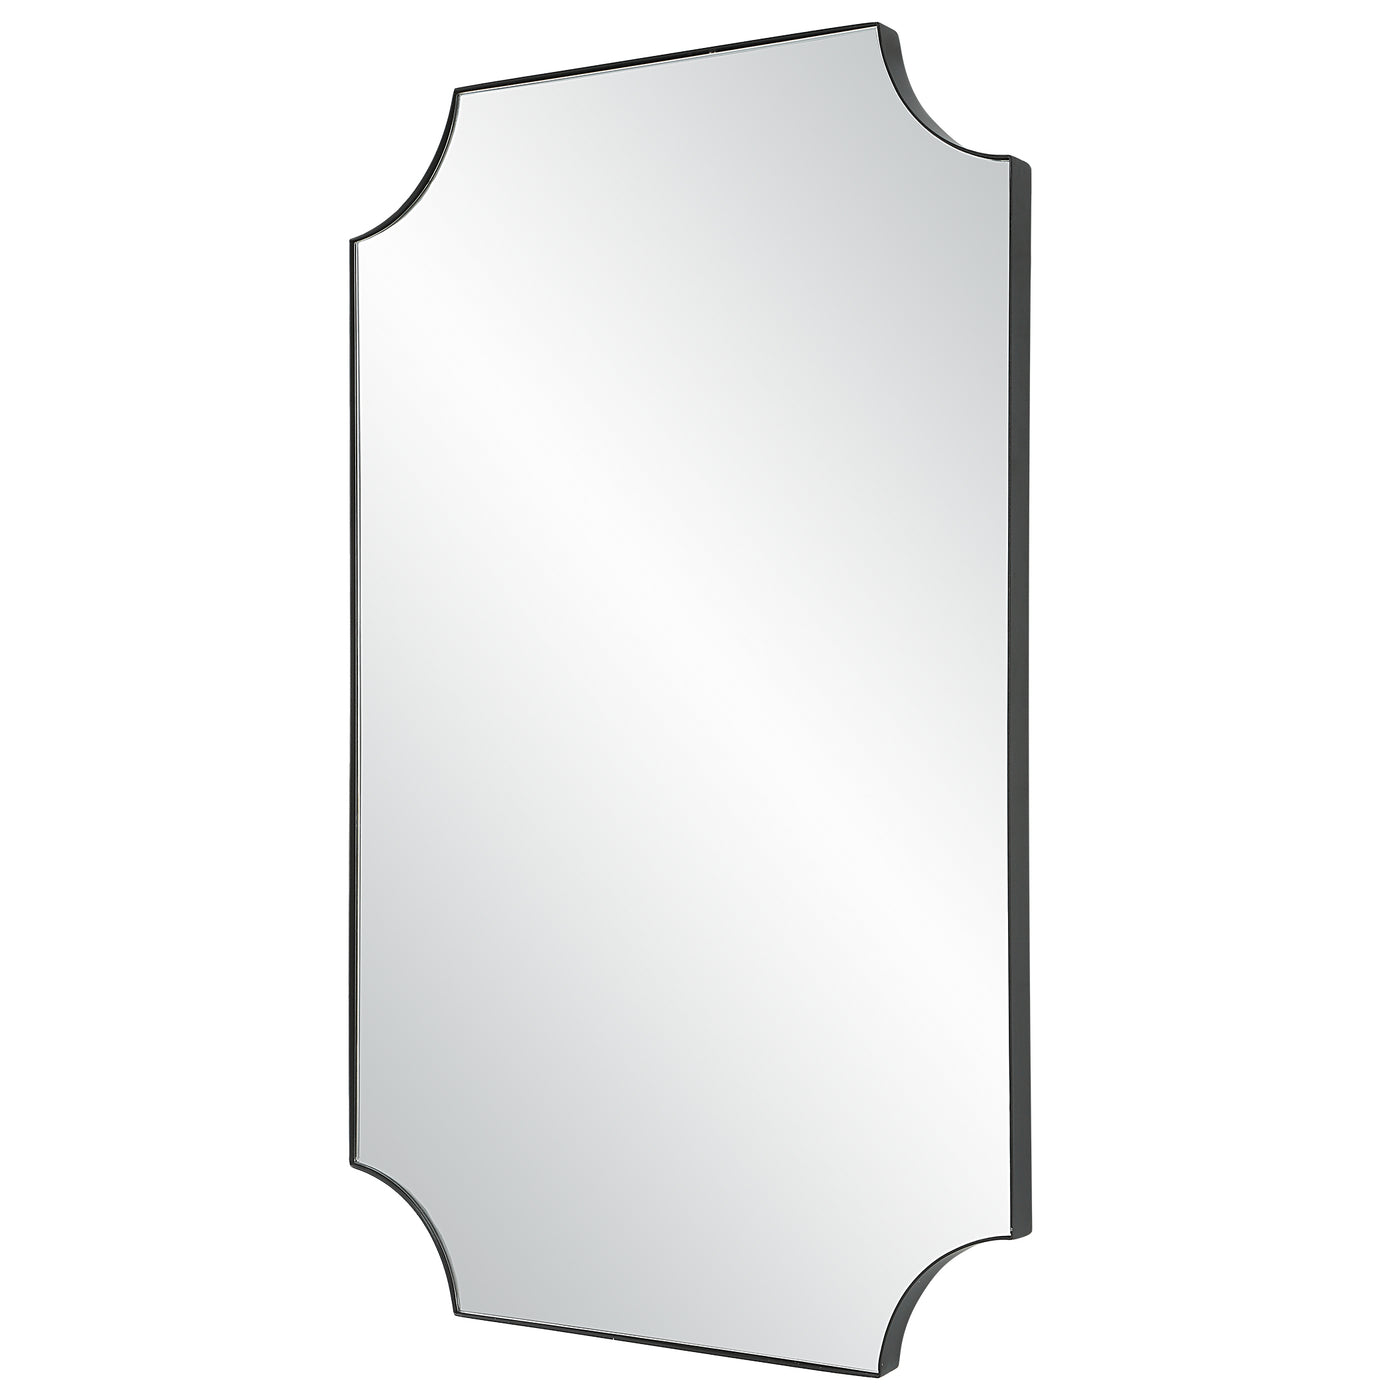 The Bellingham Mirror